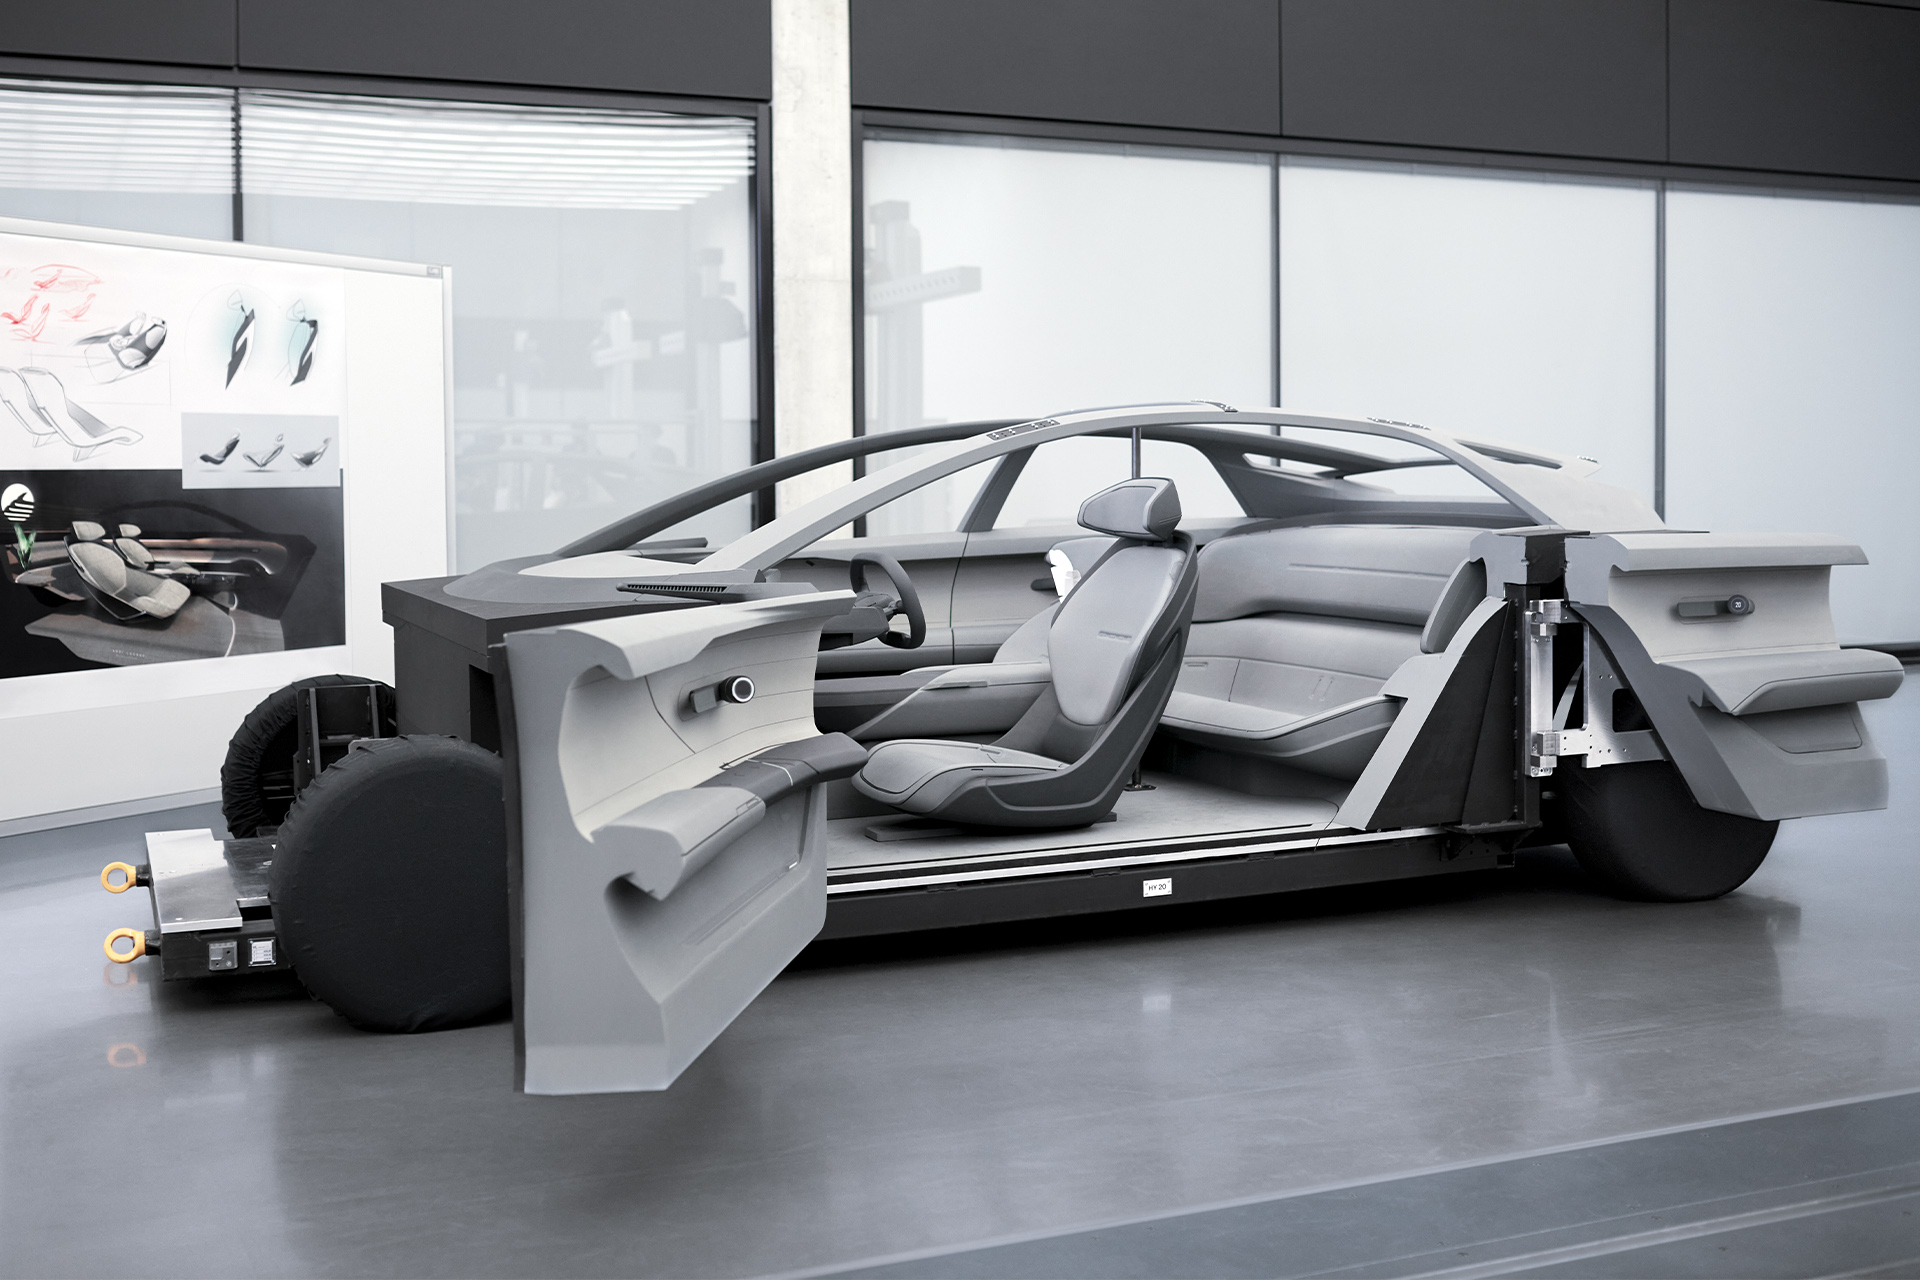 The Audi grandsphere concept{ft_concept-vehicle} with its doors open.